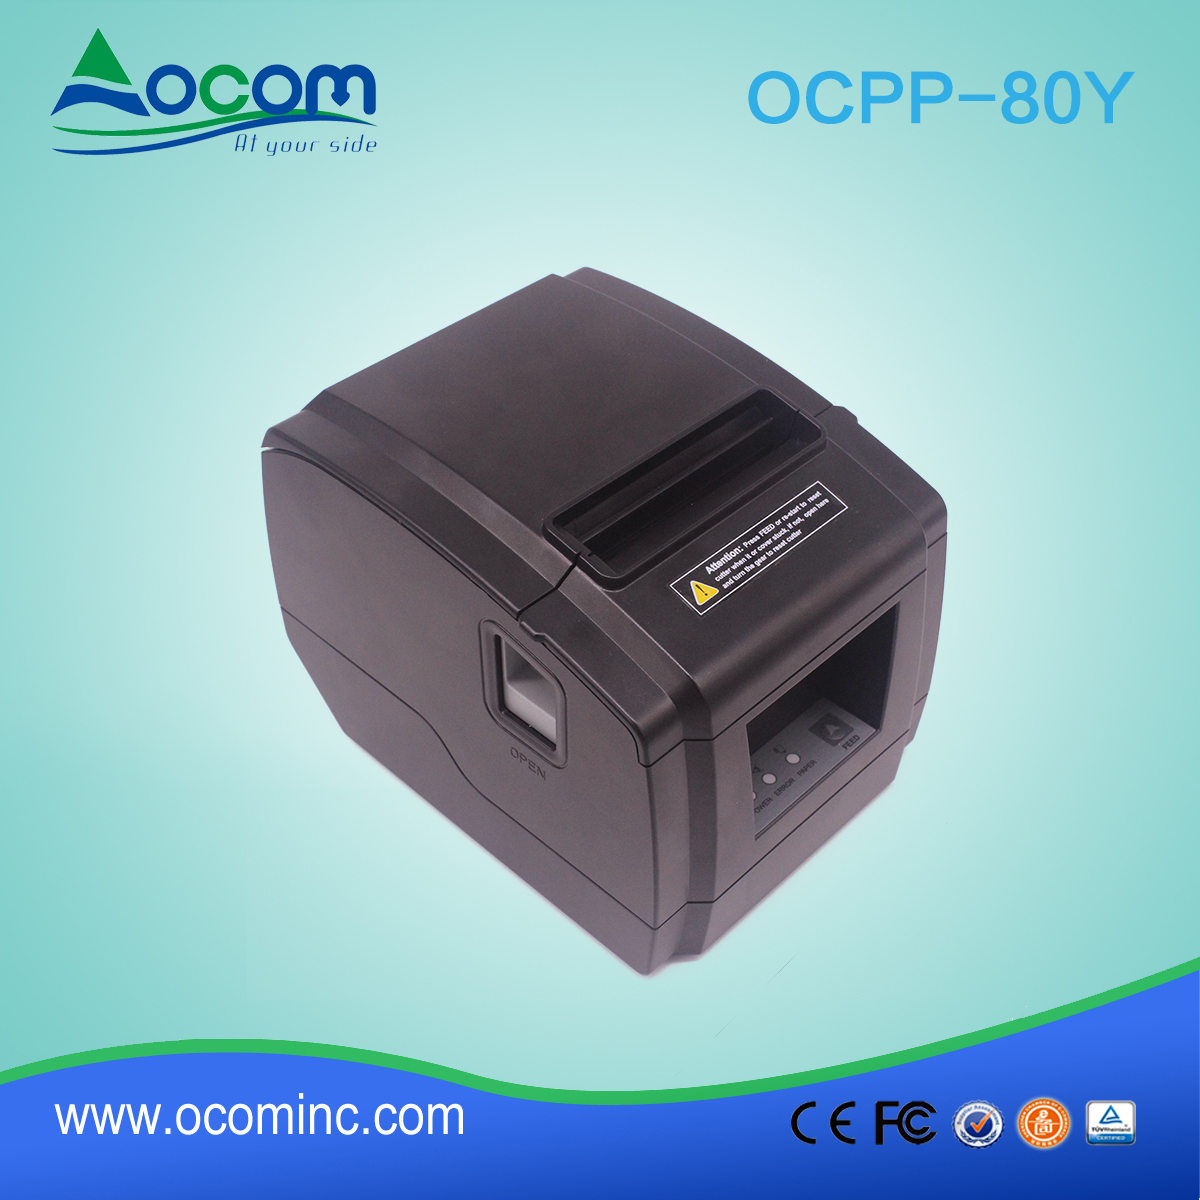 OCPP-80Y-Goedkope 3 "autosnijder POS-bonprinter